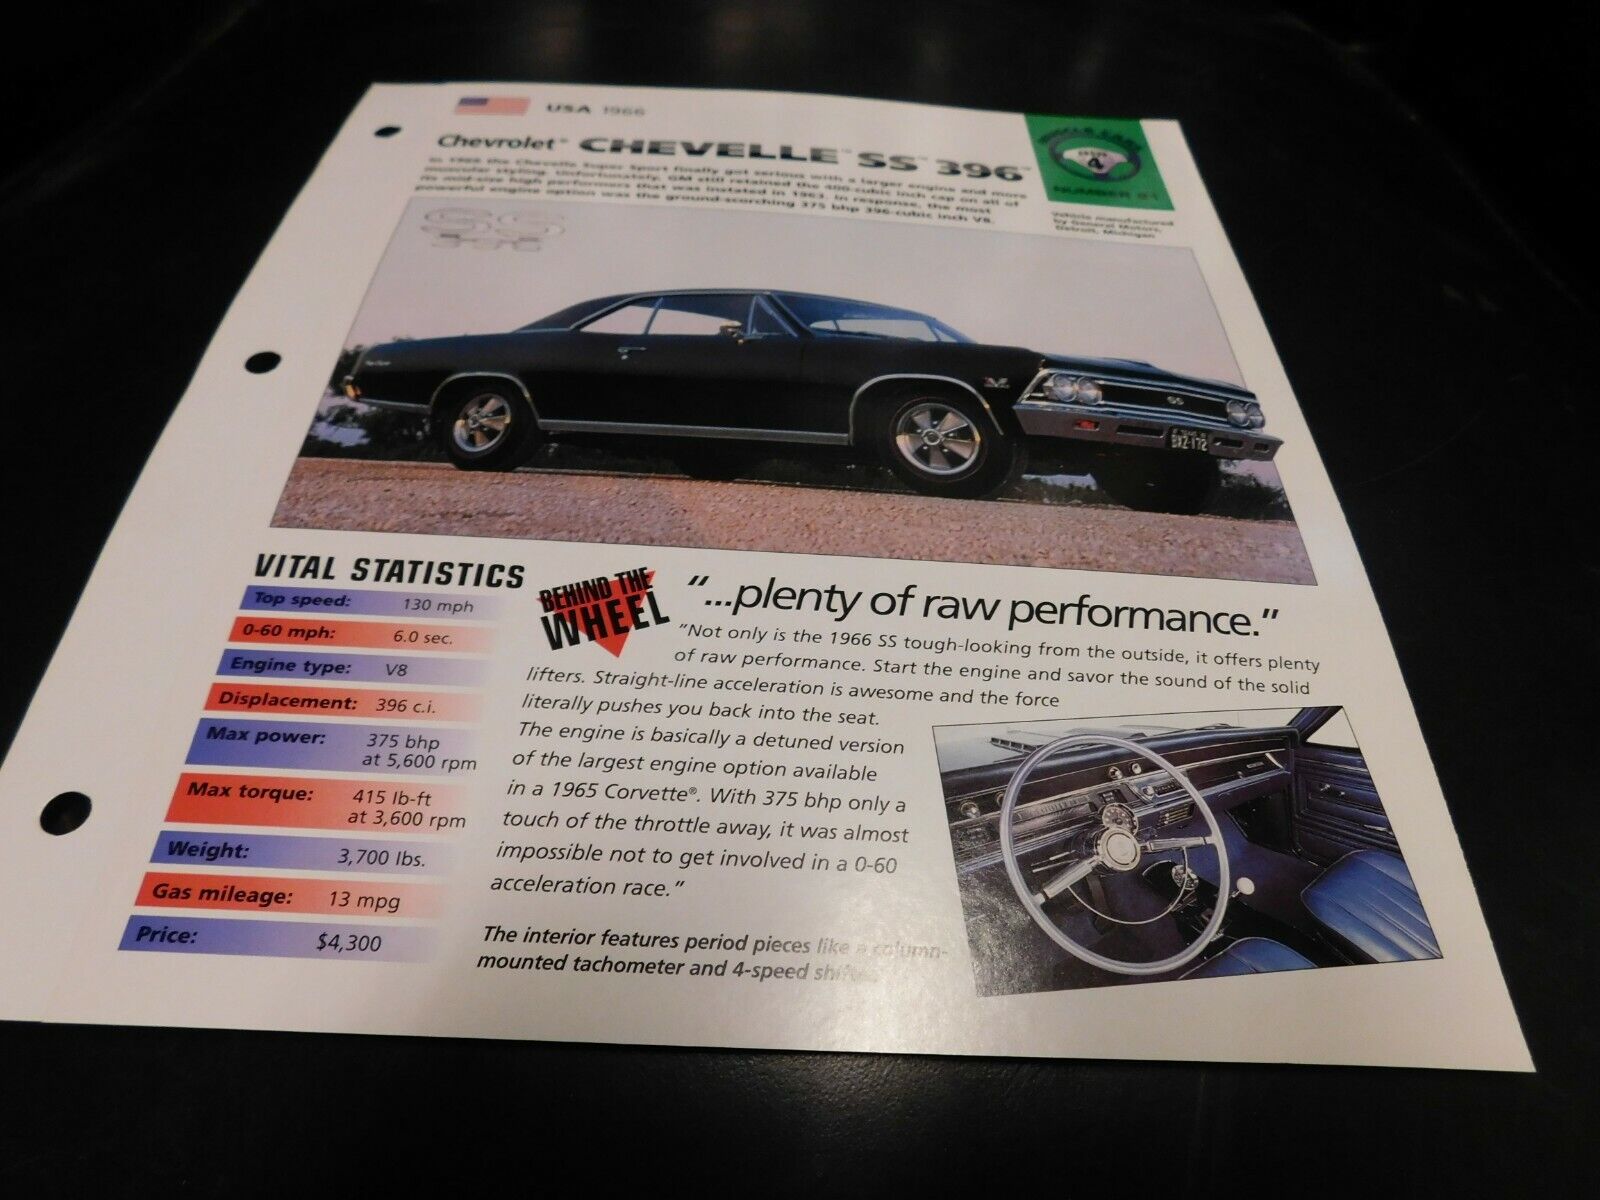 1966 Chevrolet Chevelle SS 396 Spec Sheet Brochure Photo Poster